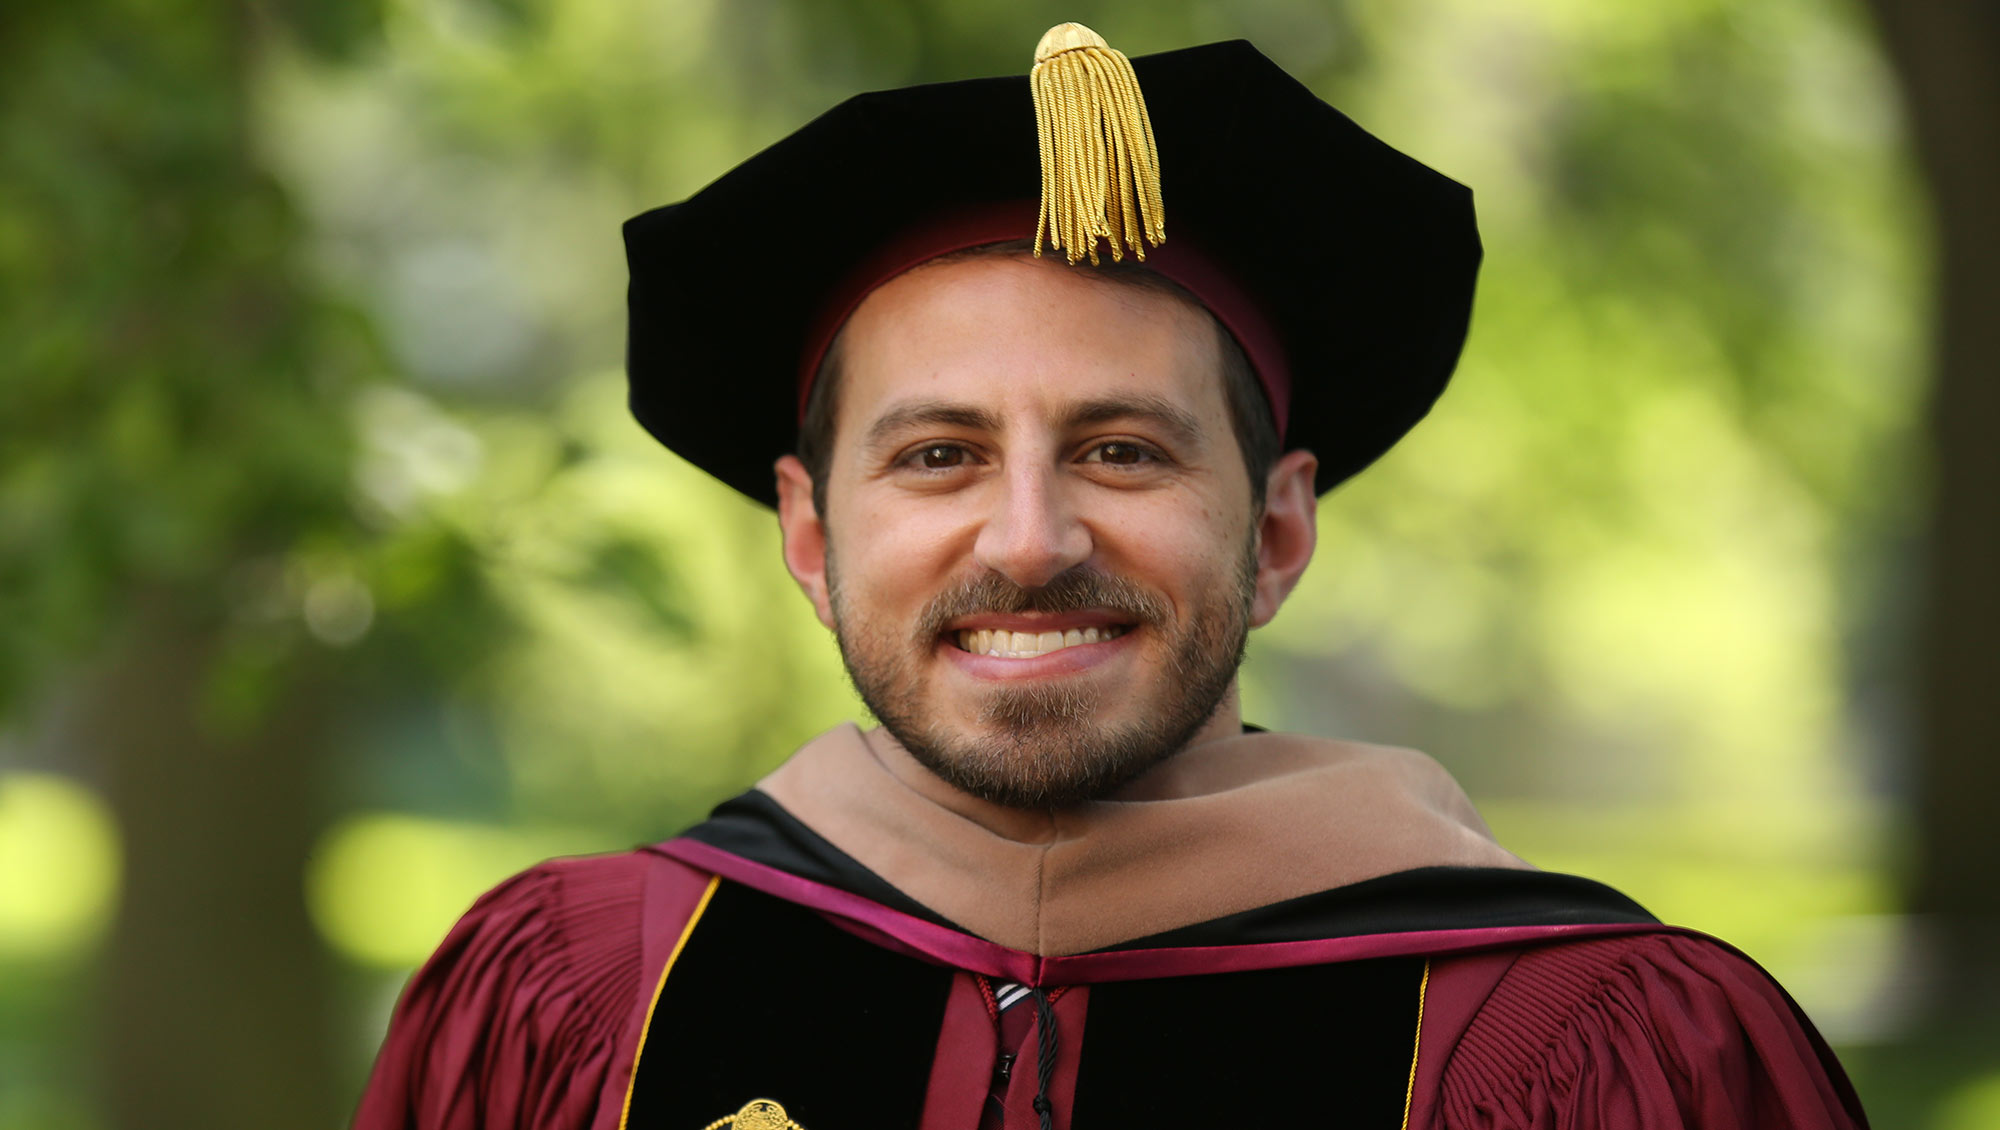 PhD '21 Program Graduate Joseph A. Micale smiles